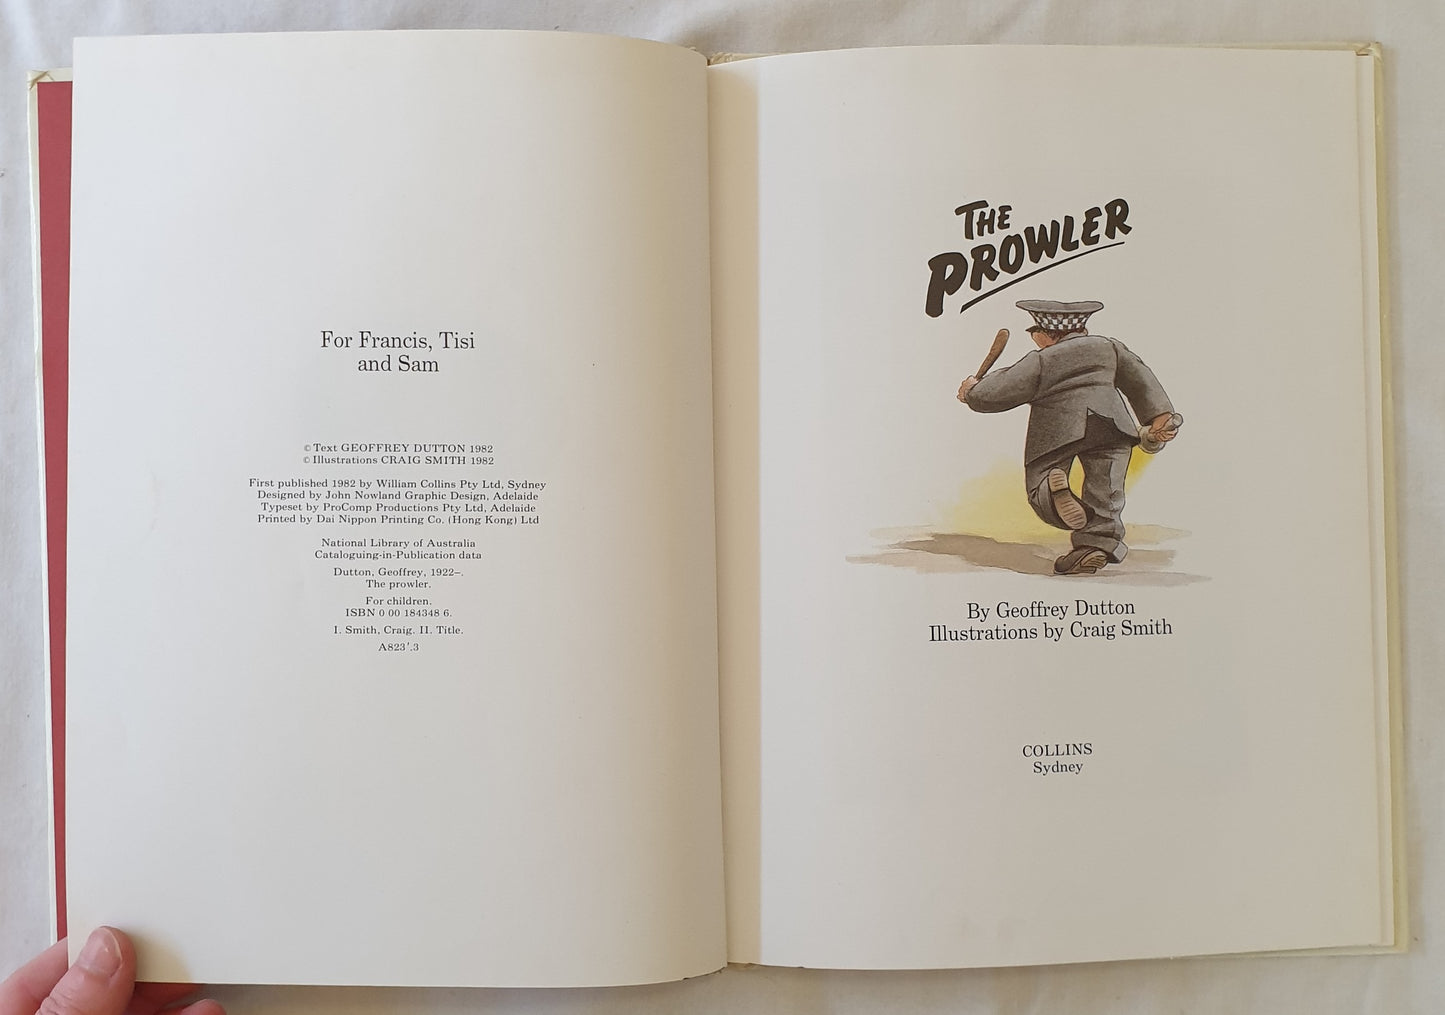 The Prowler by Geoffrey Dutton